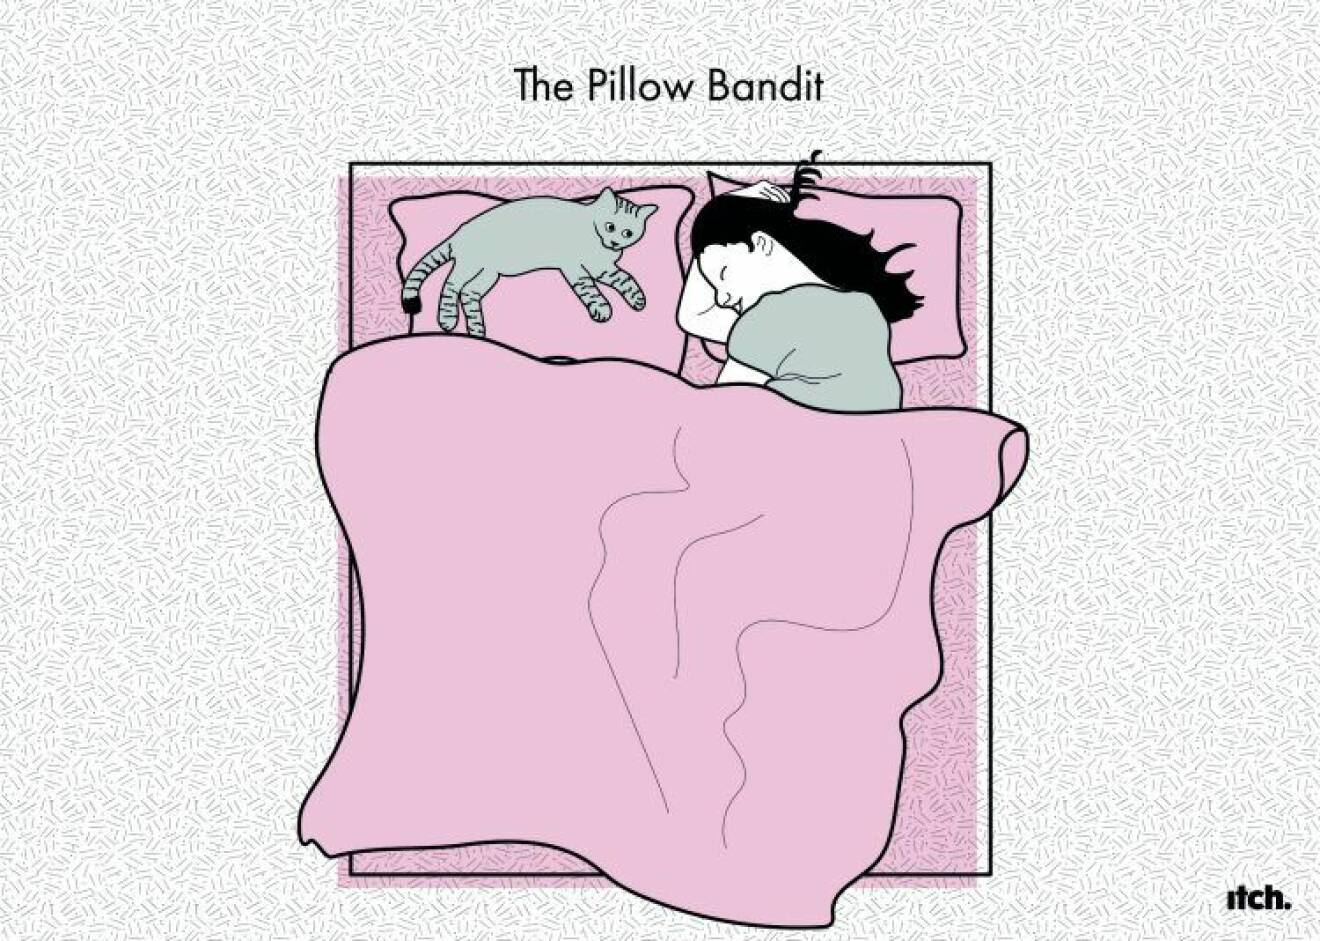 The Pillow Bandit